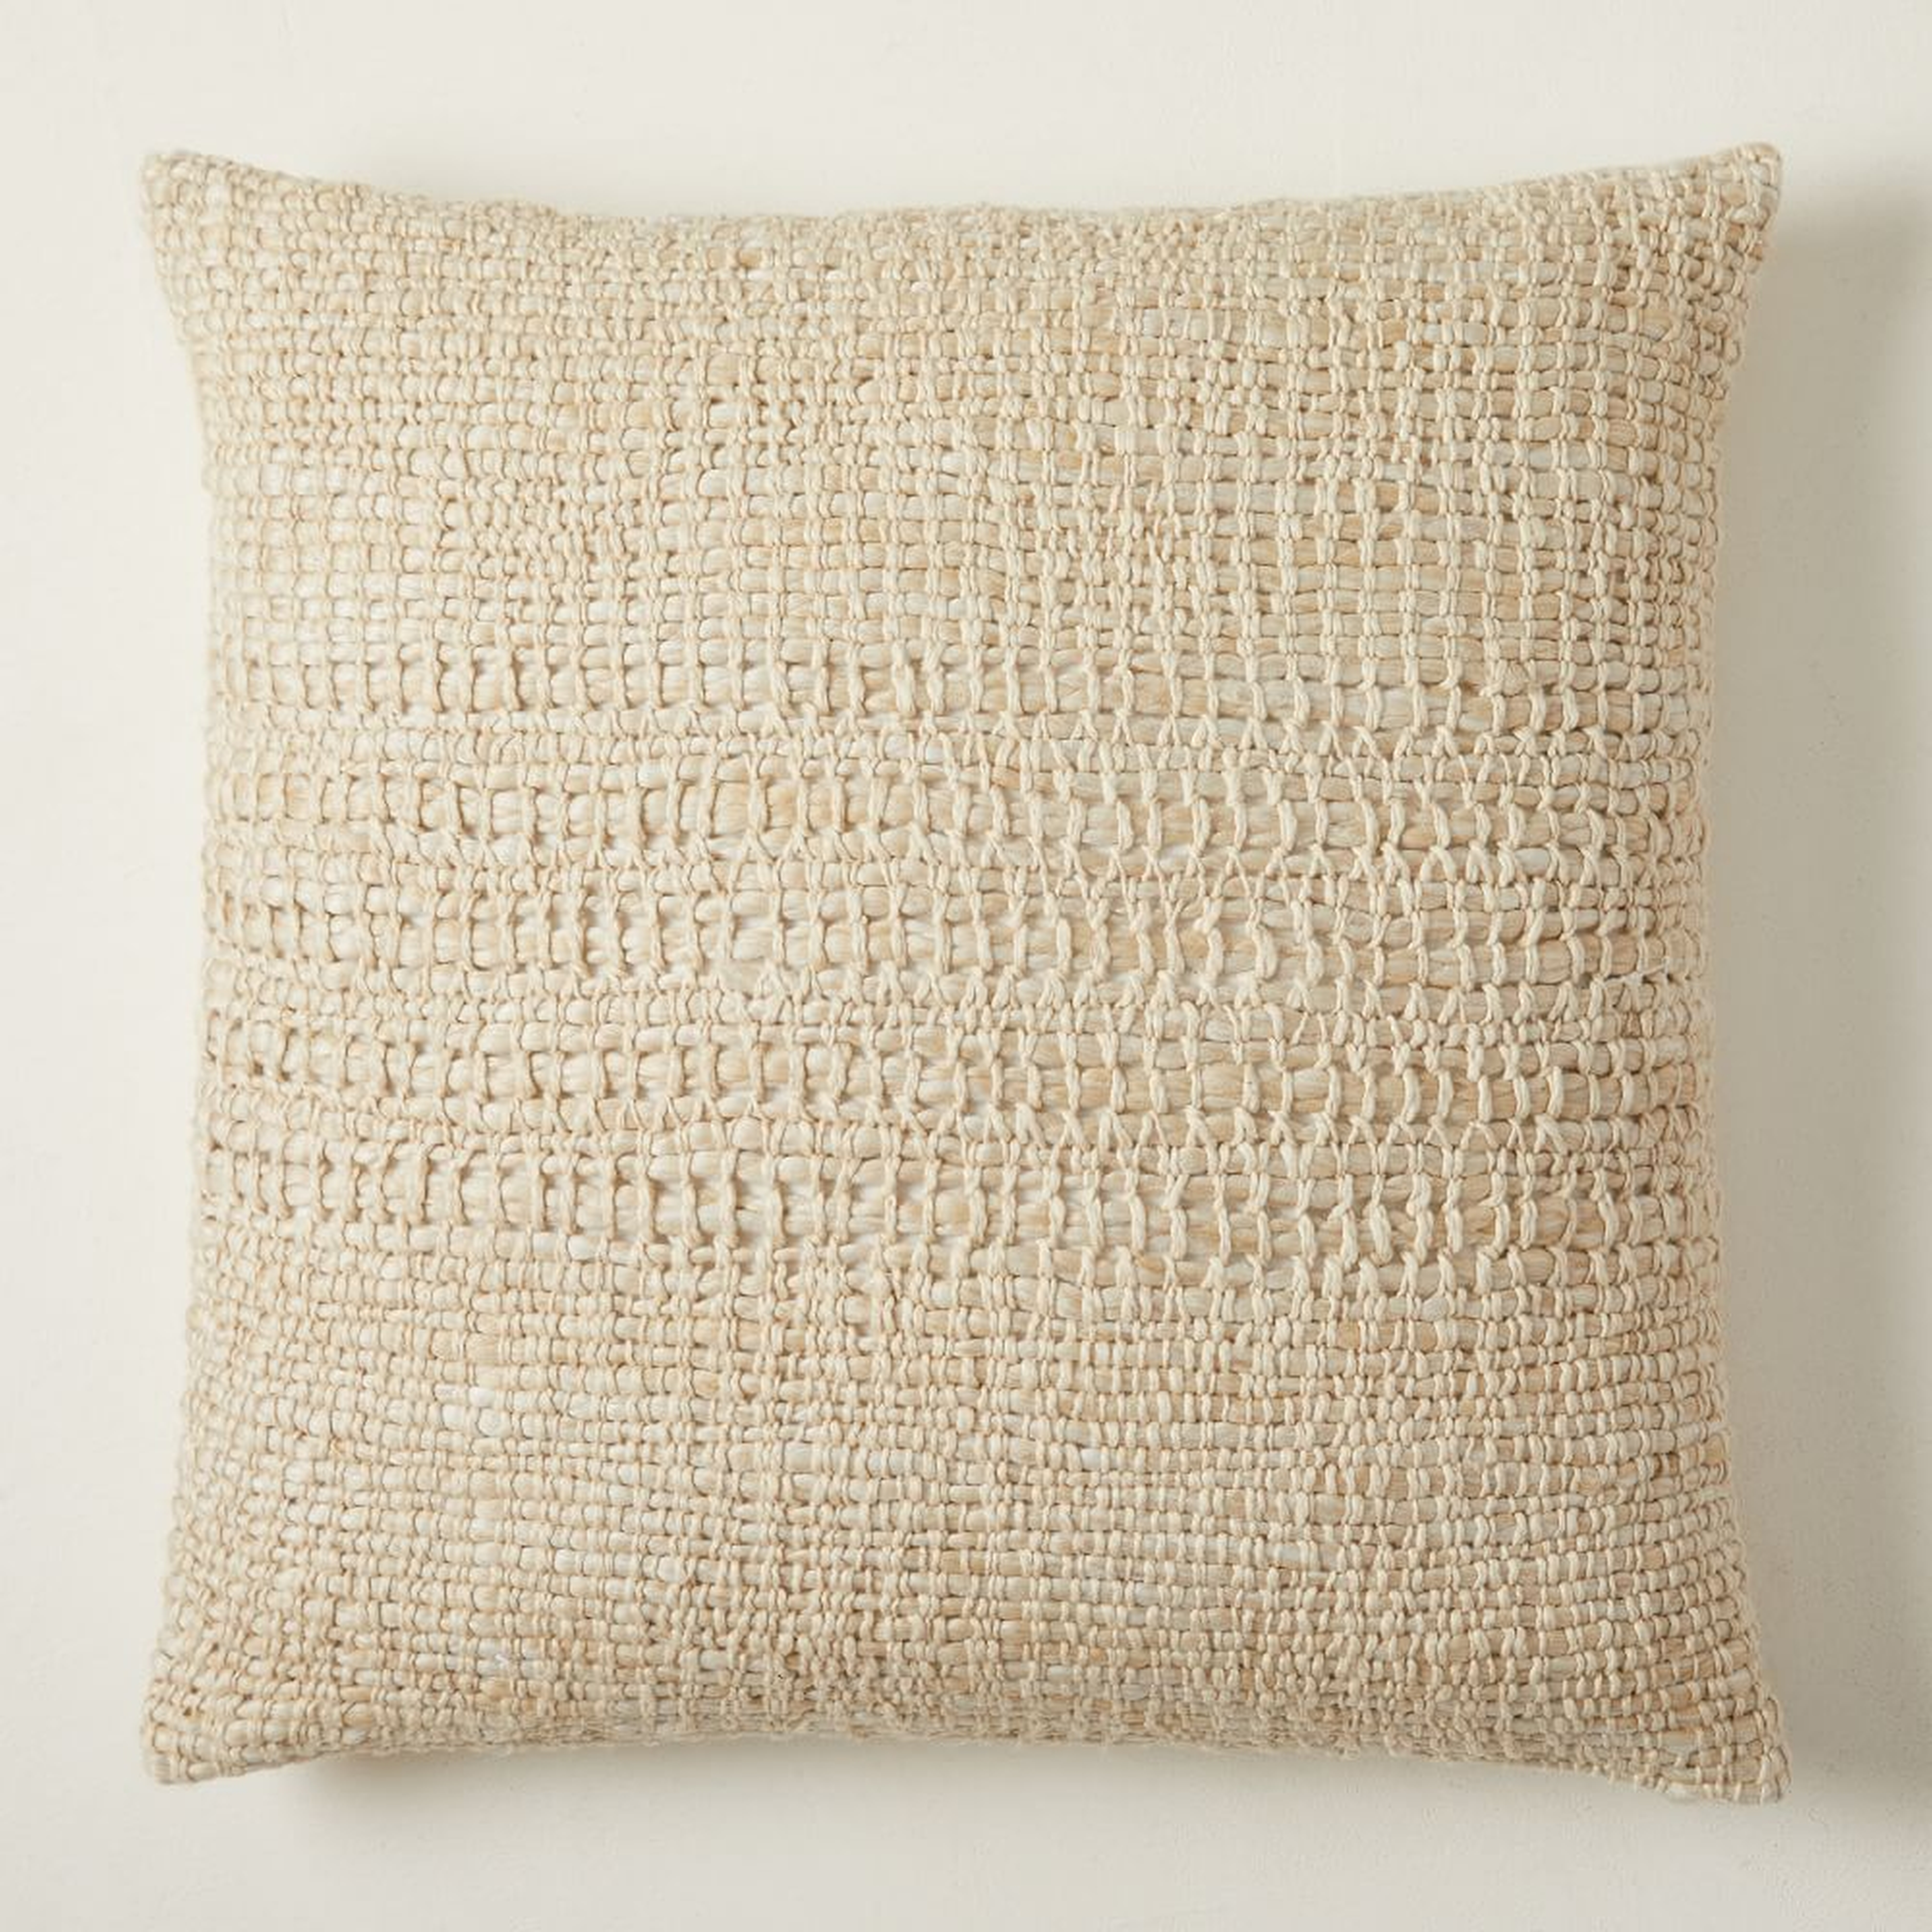 Cozy Weave Pillow Cover, 24"x24", Natural, Set of 2 - West Elm